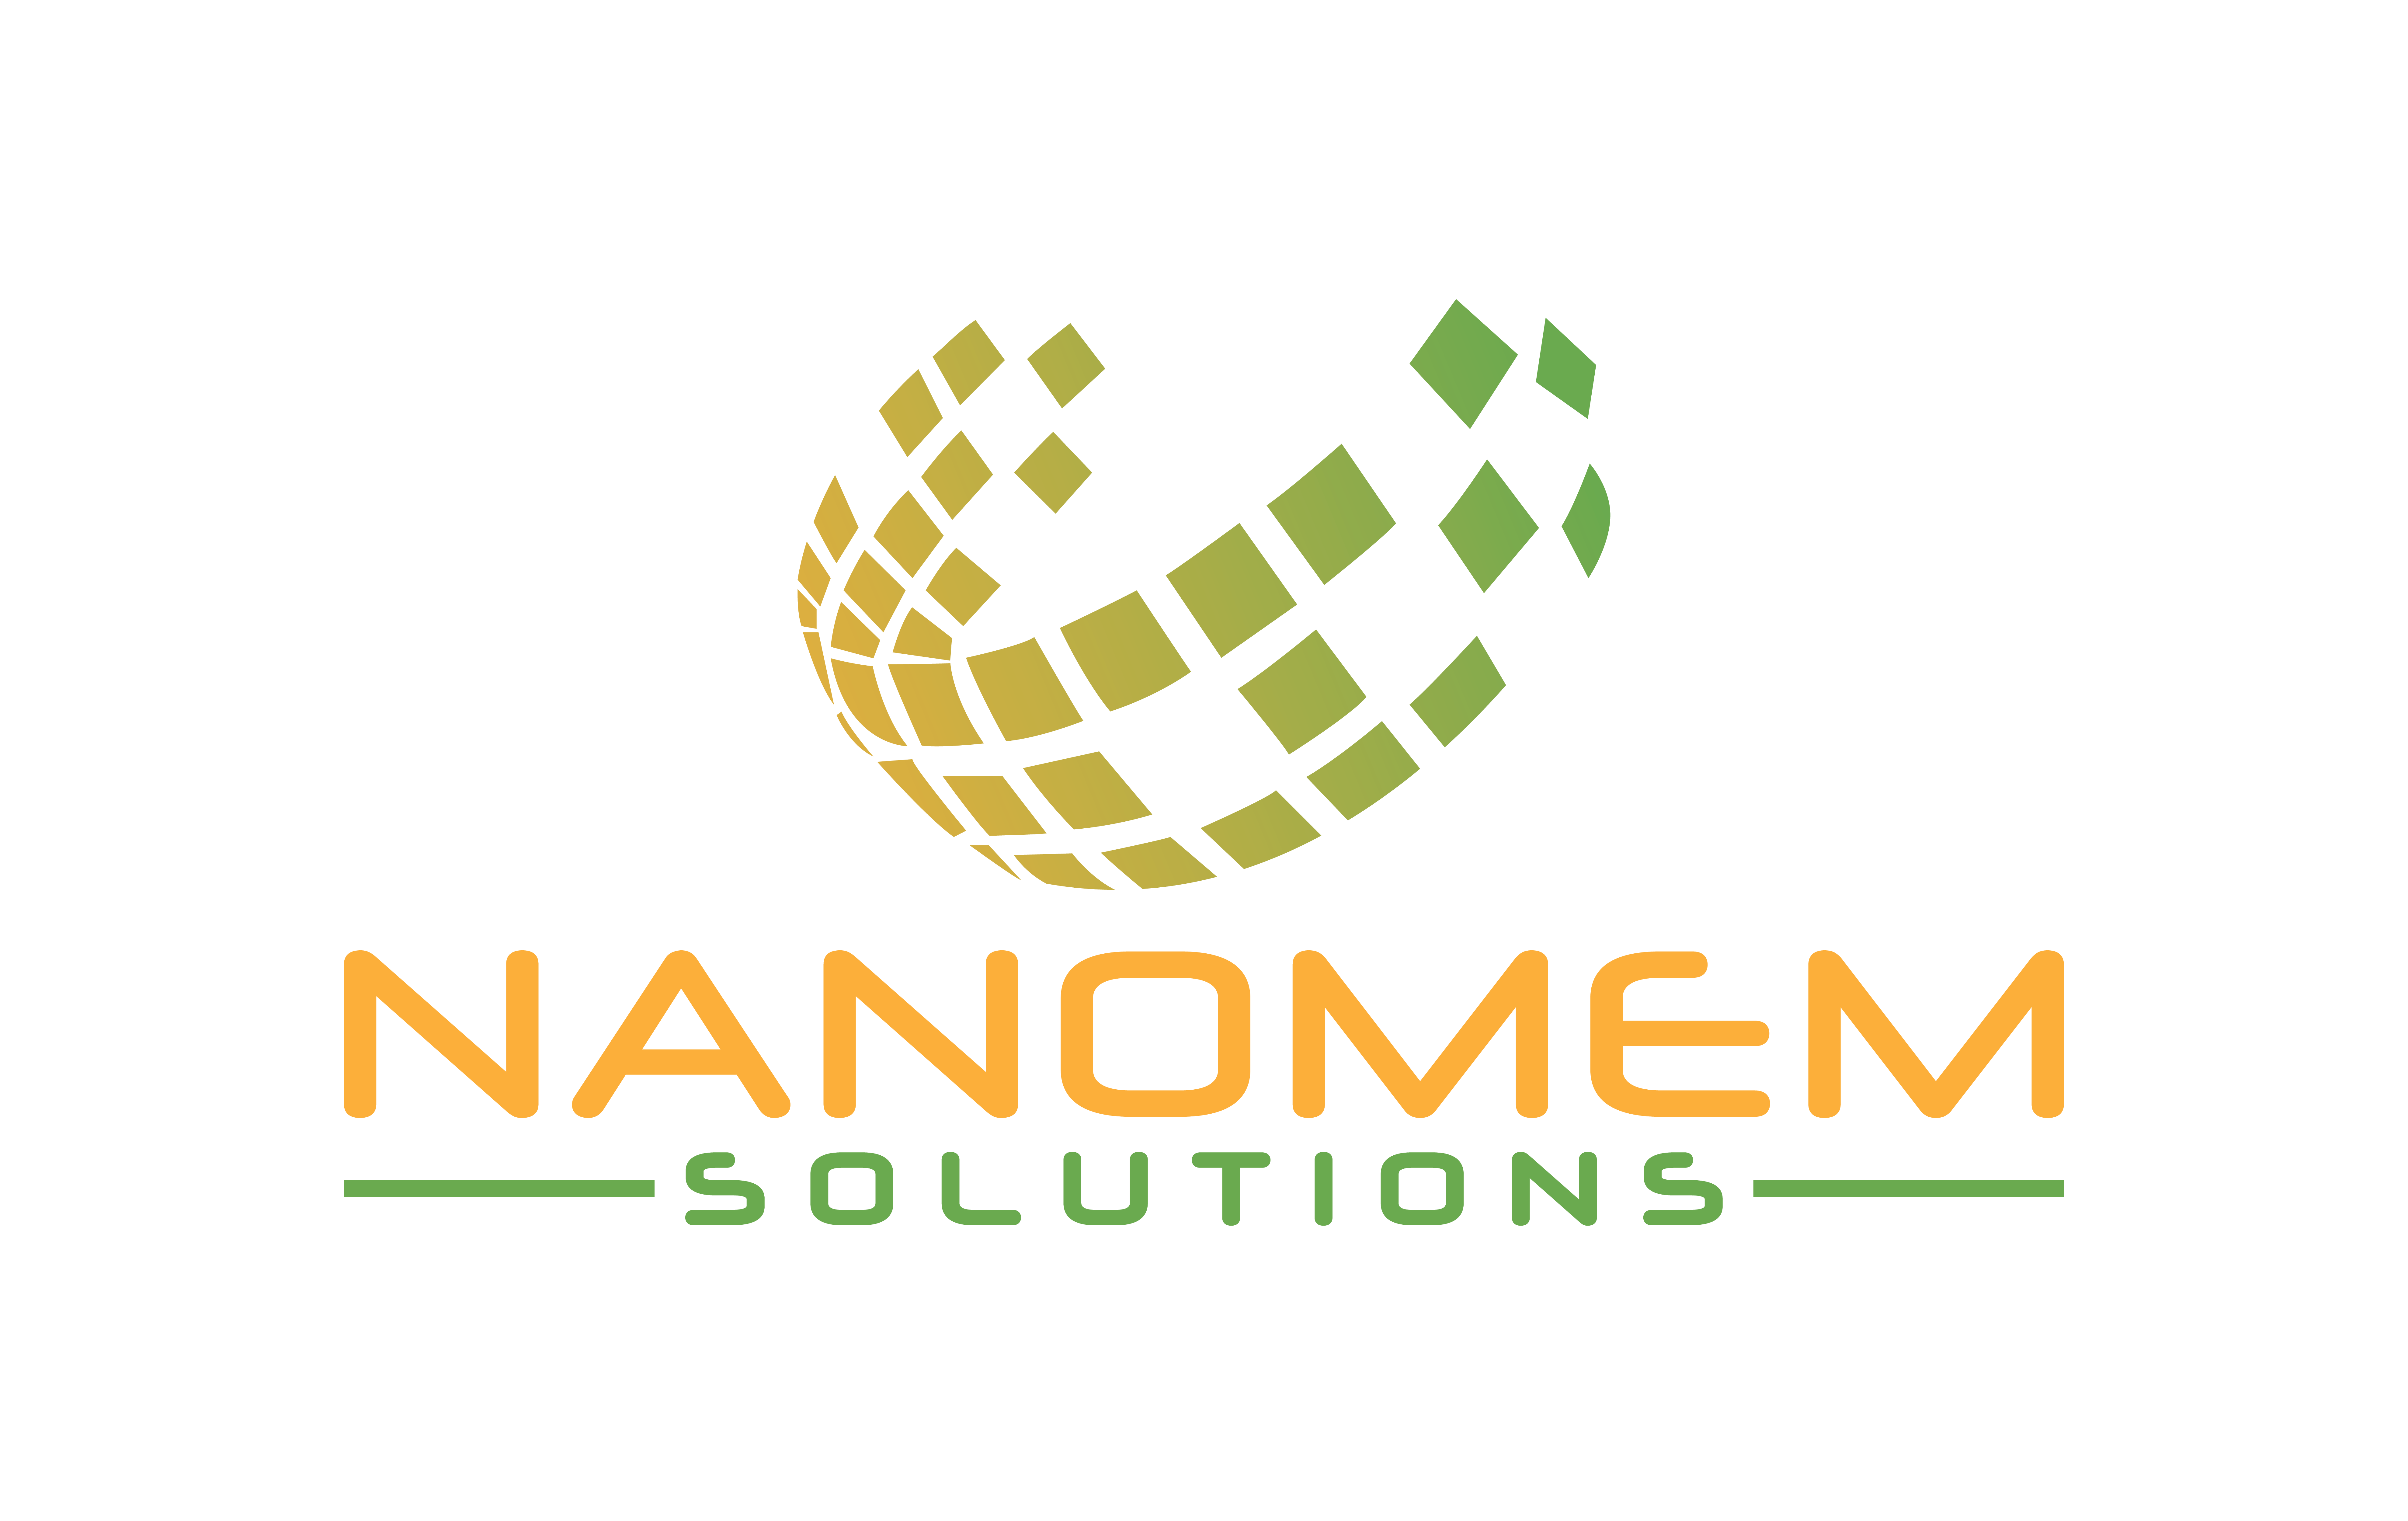 Nanomem Solutions